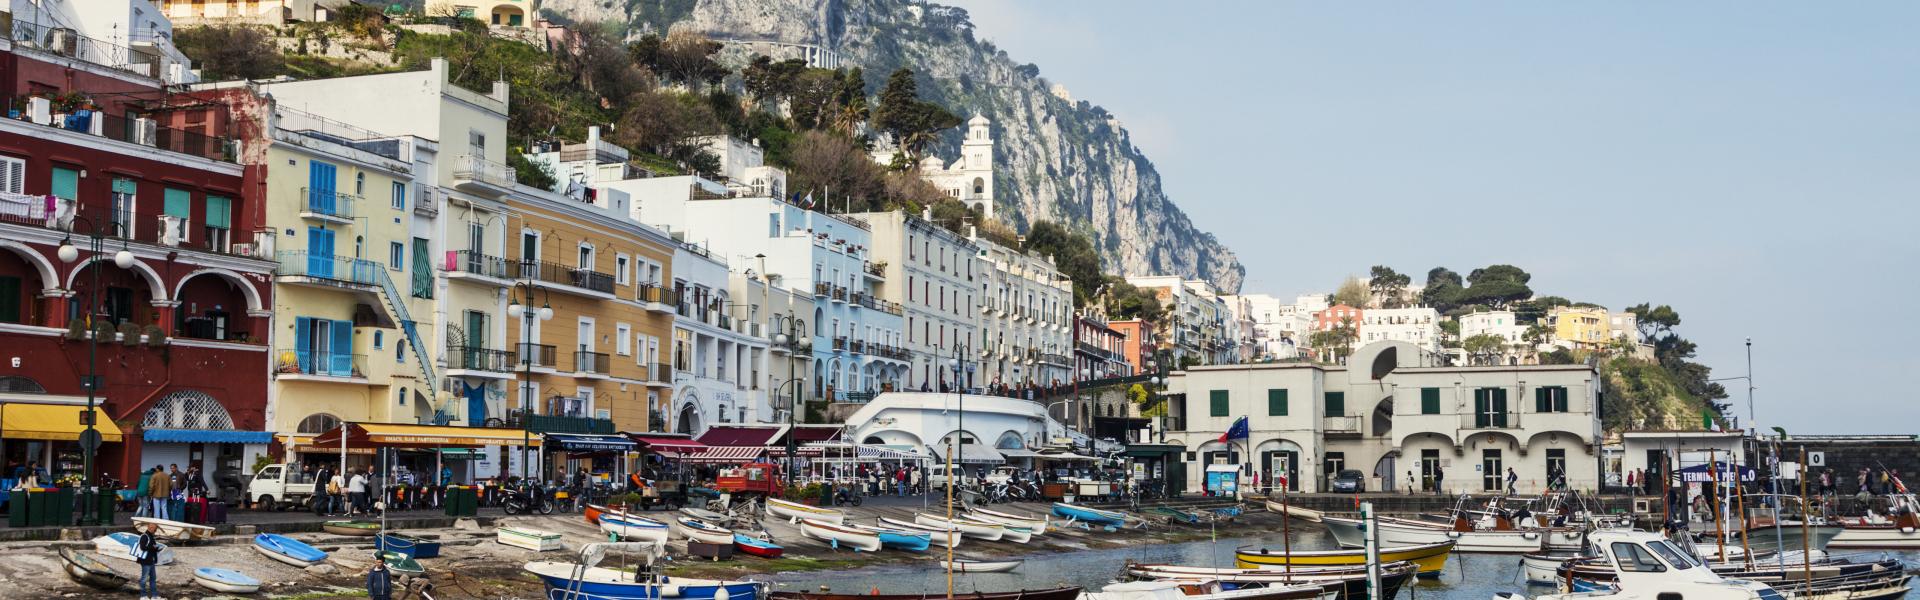 Capri Scenic View